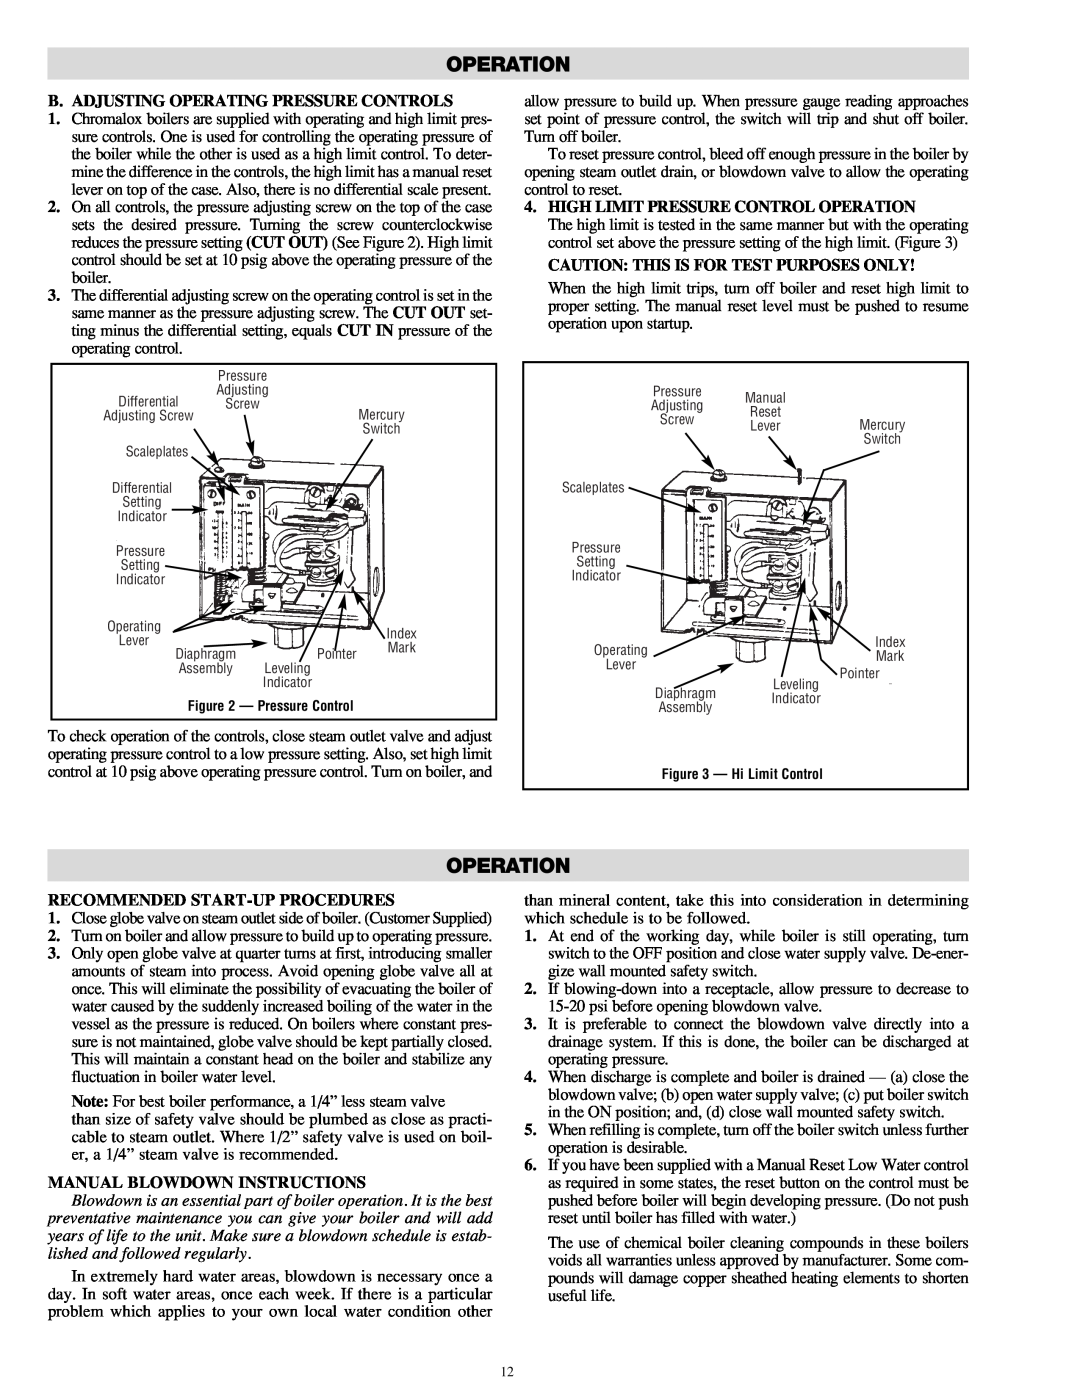 Chromalox CHPES-6A manual B. Adjusting Operating Pressure Controls, High Limit Pressure Control Operation 